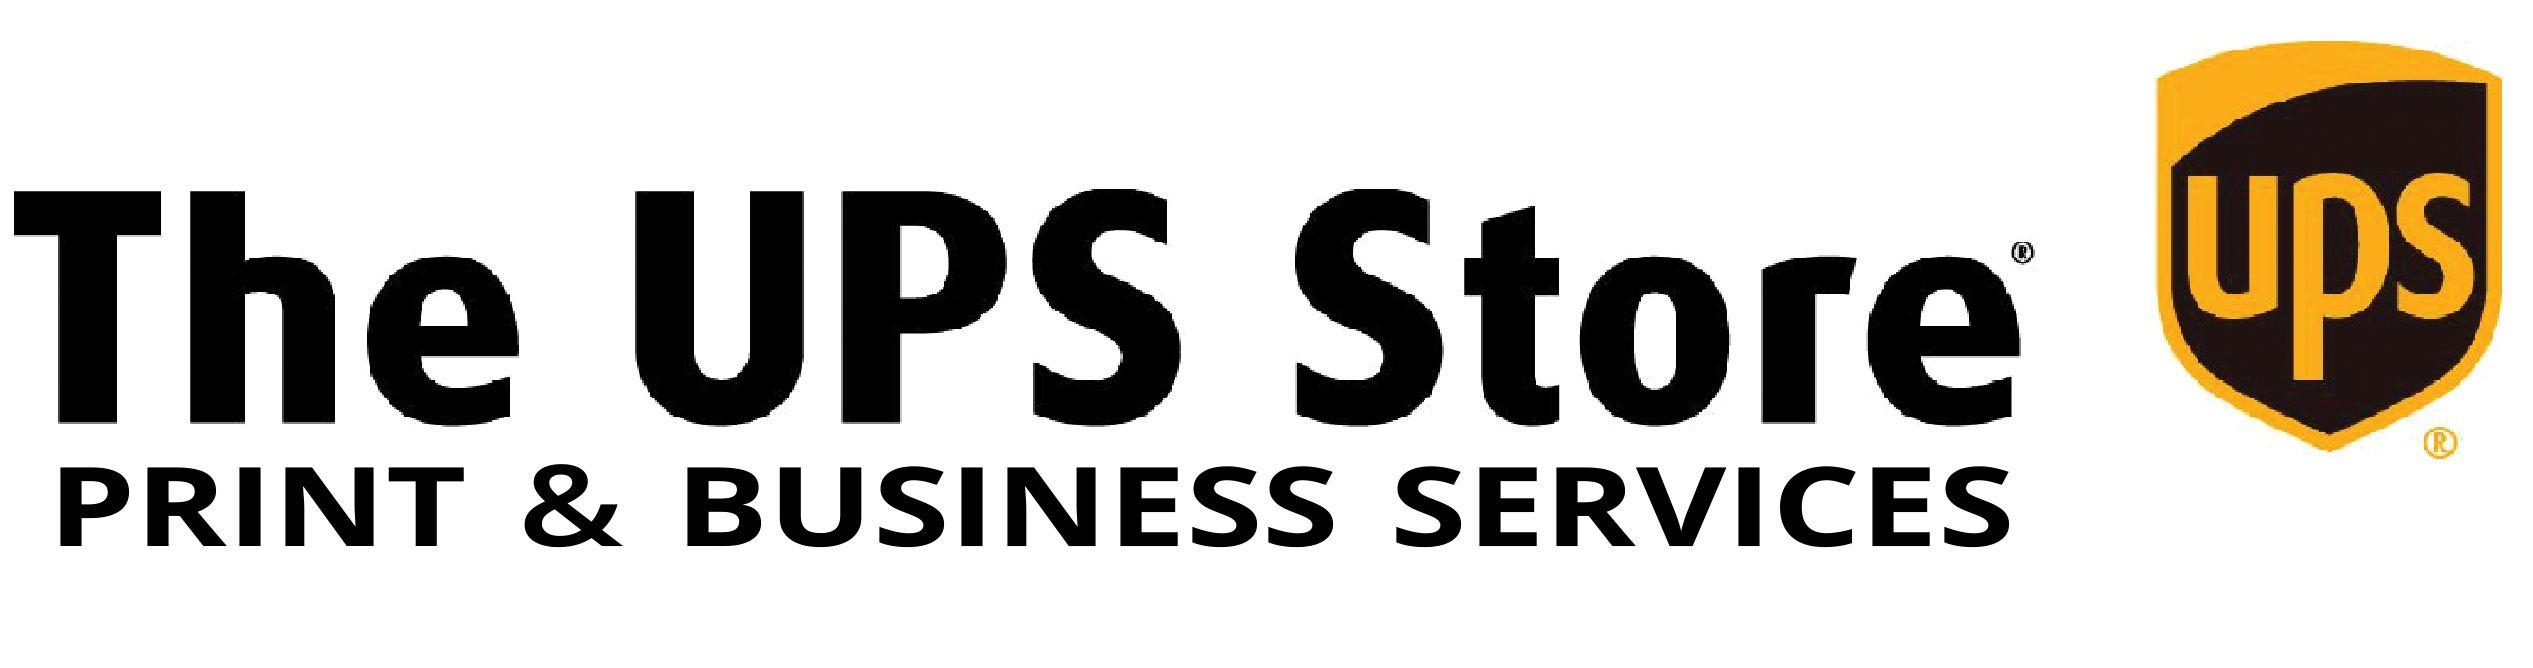 UPS Store Logo - The UPS Store